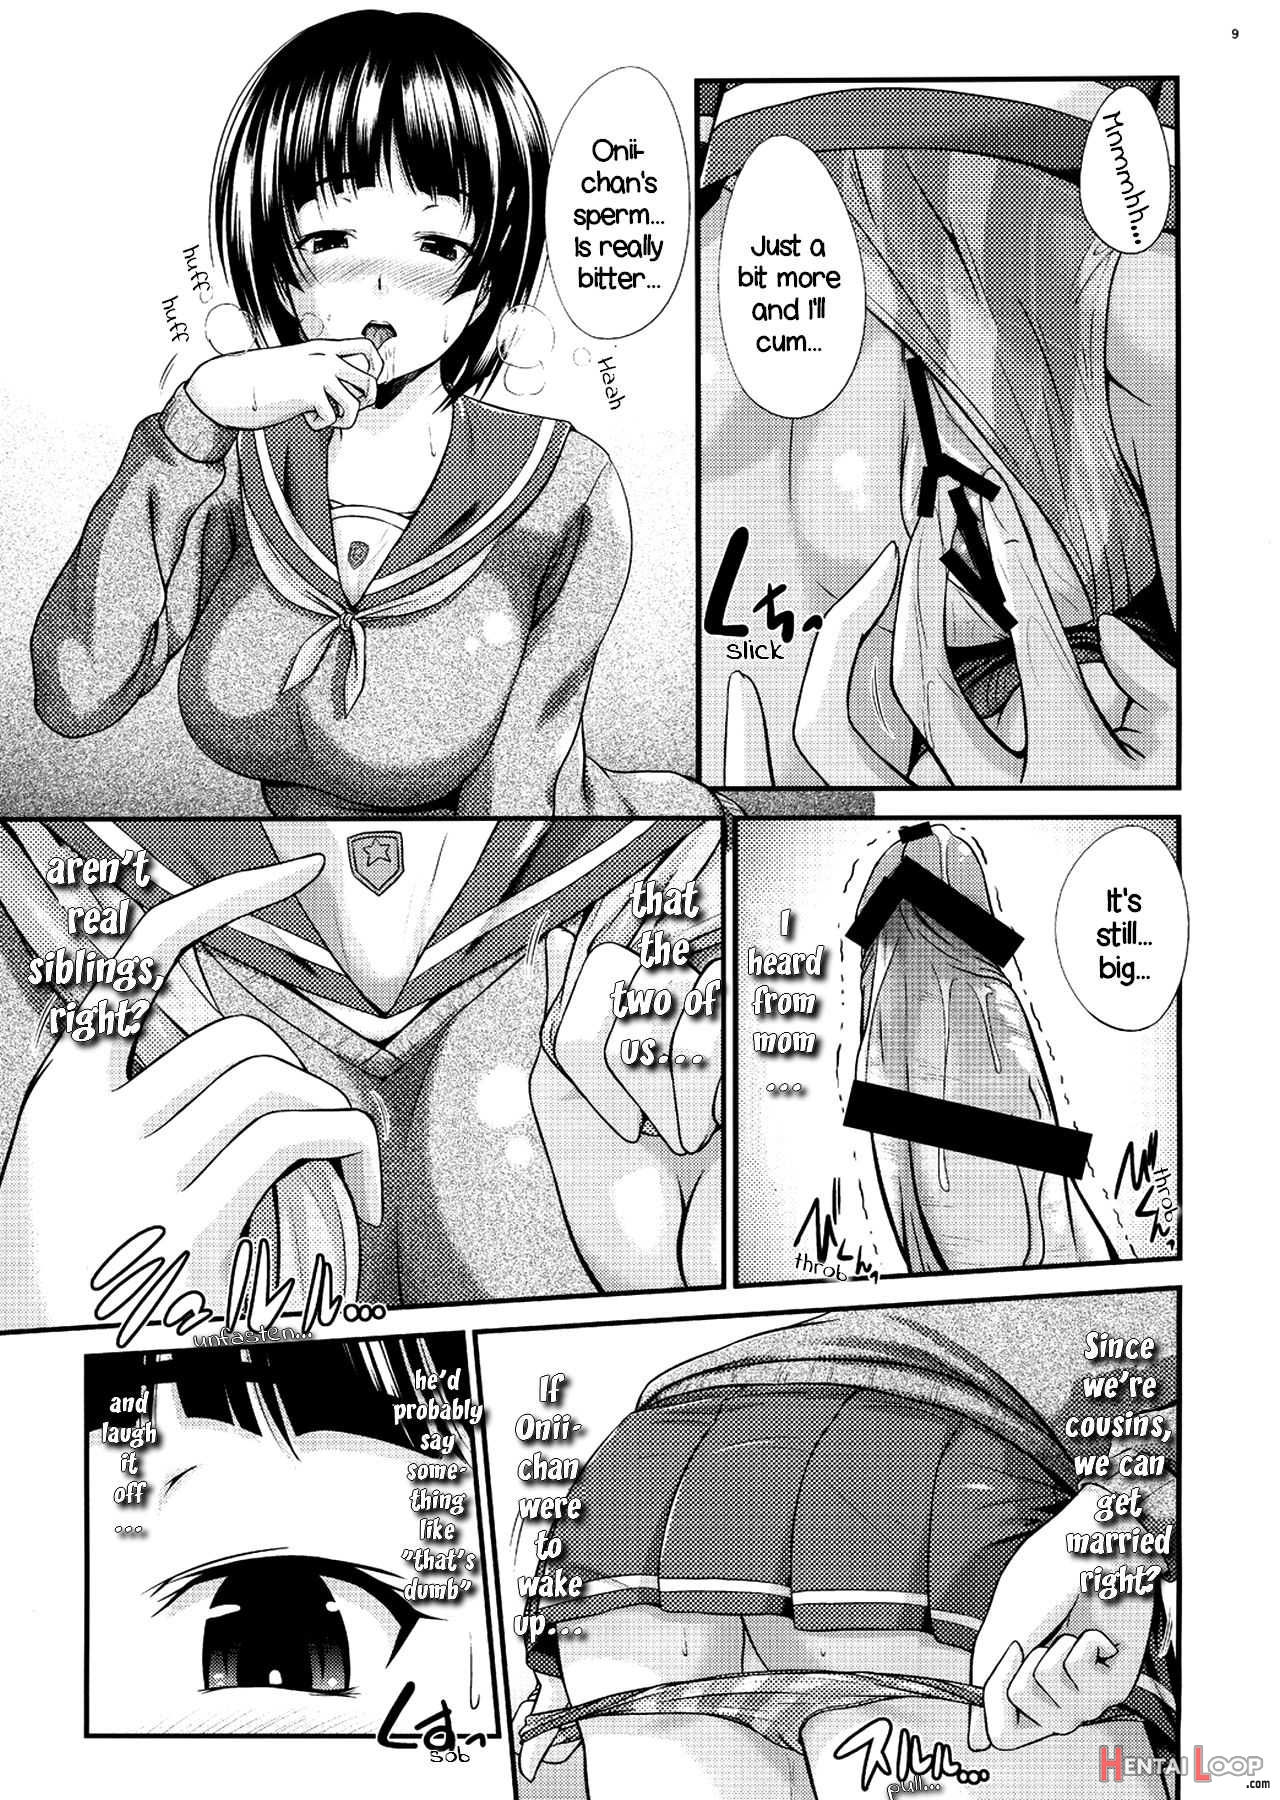 Suguha's Secret page 8